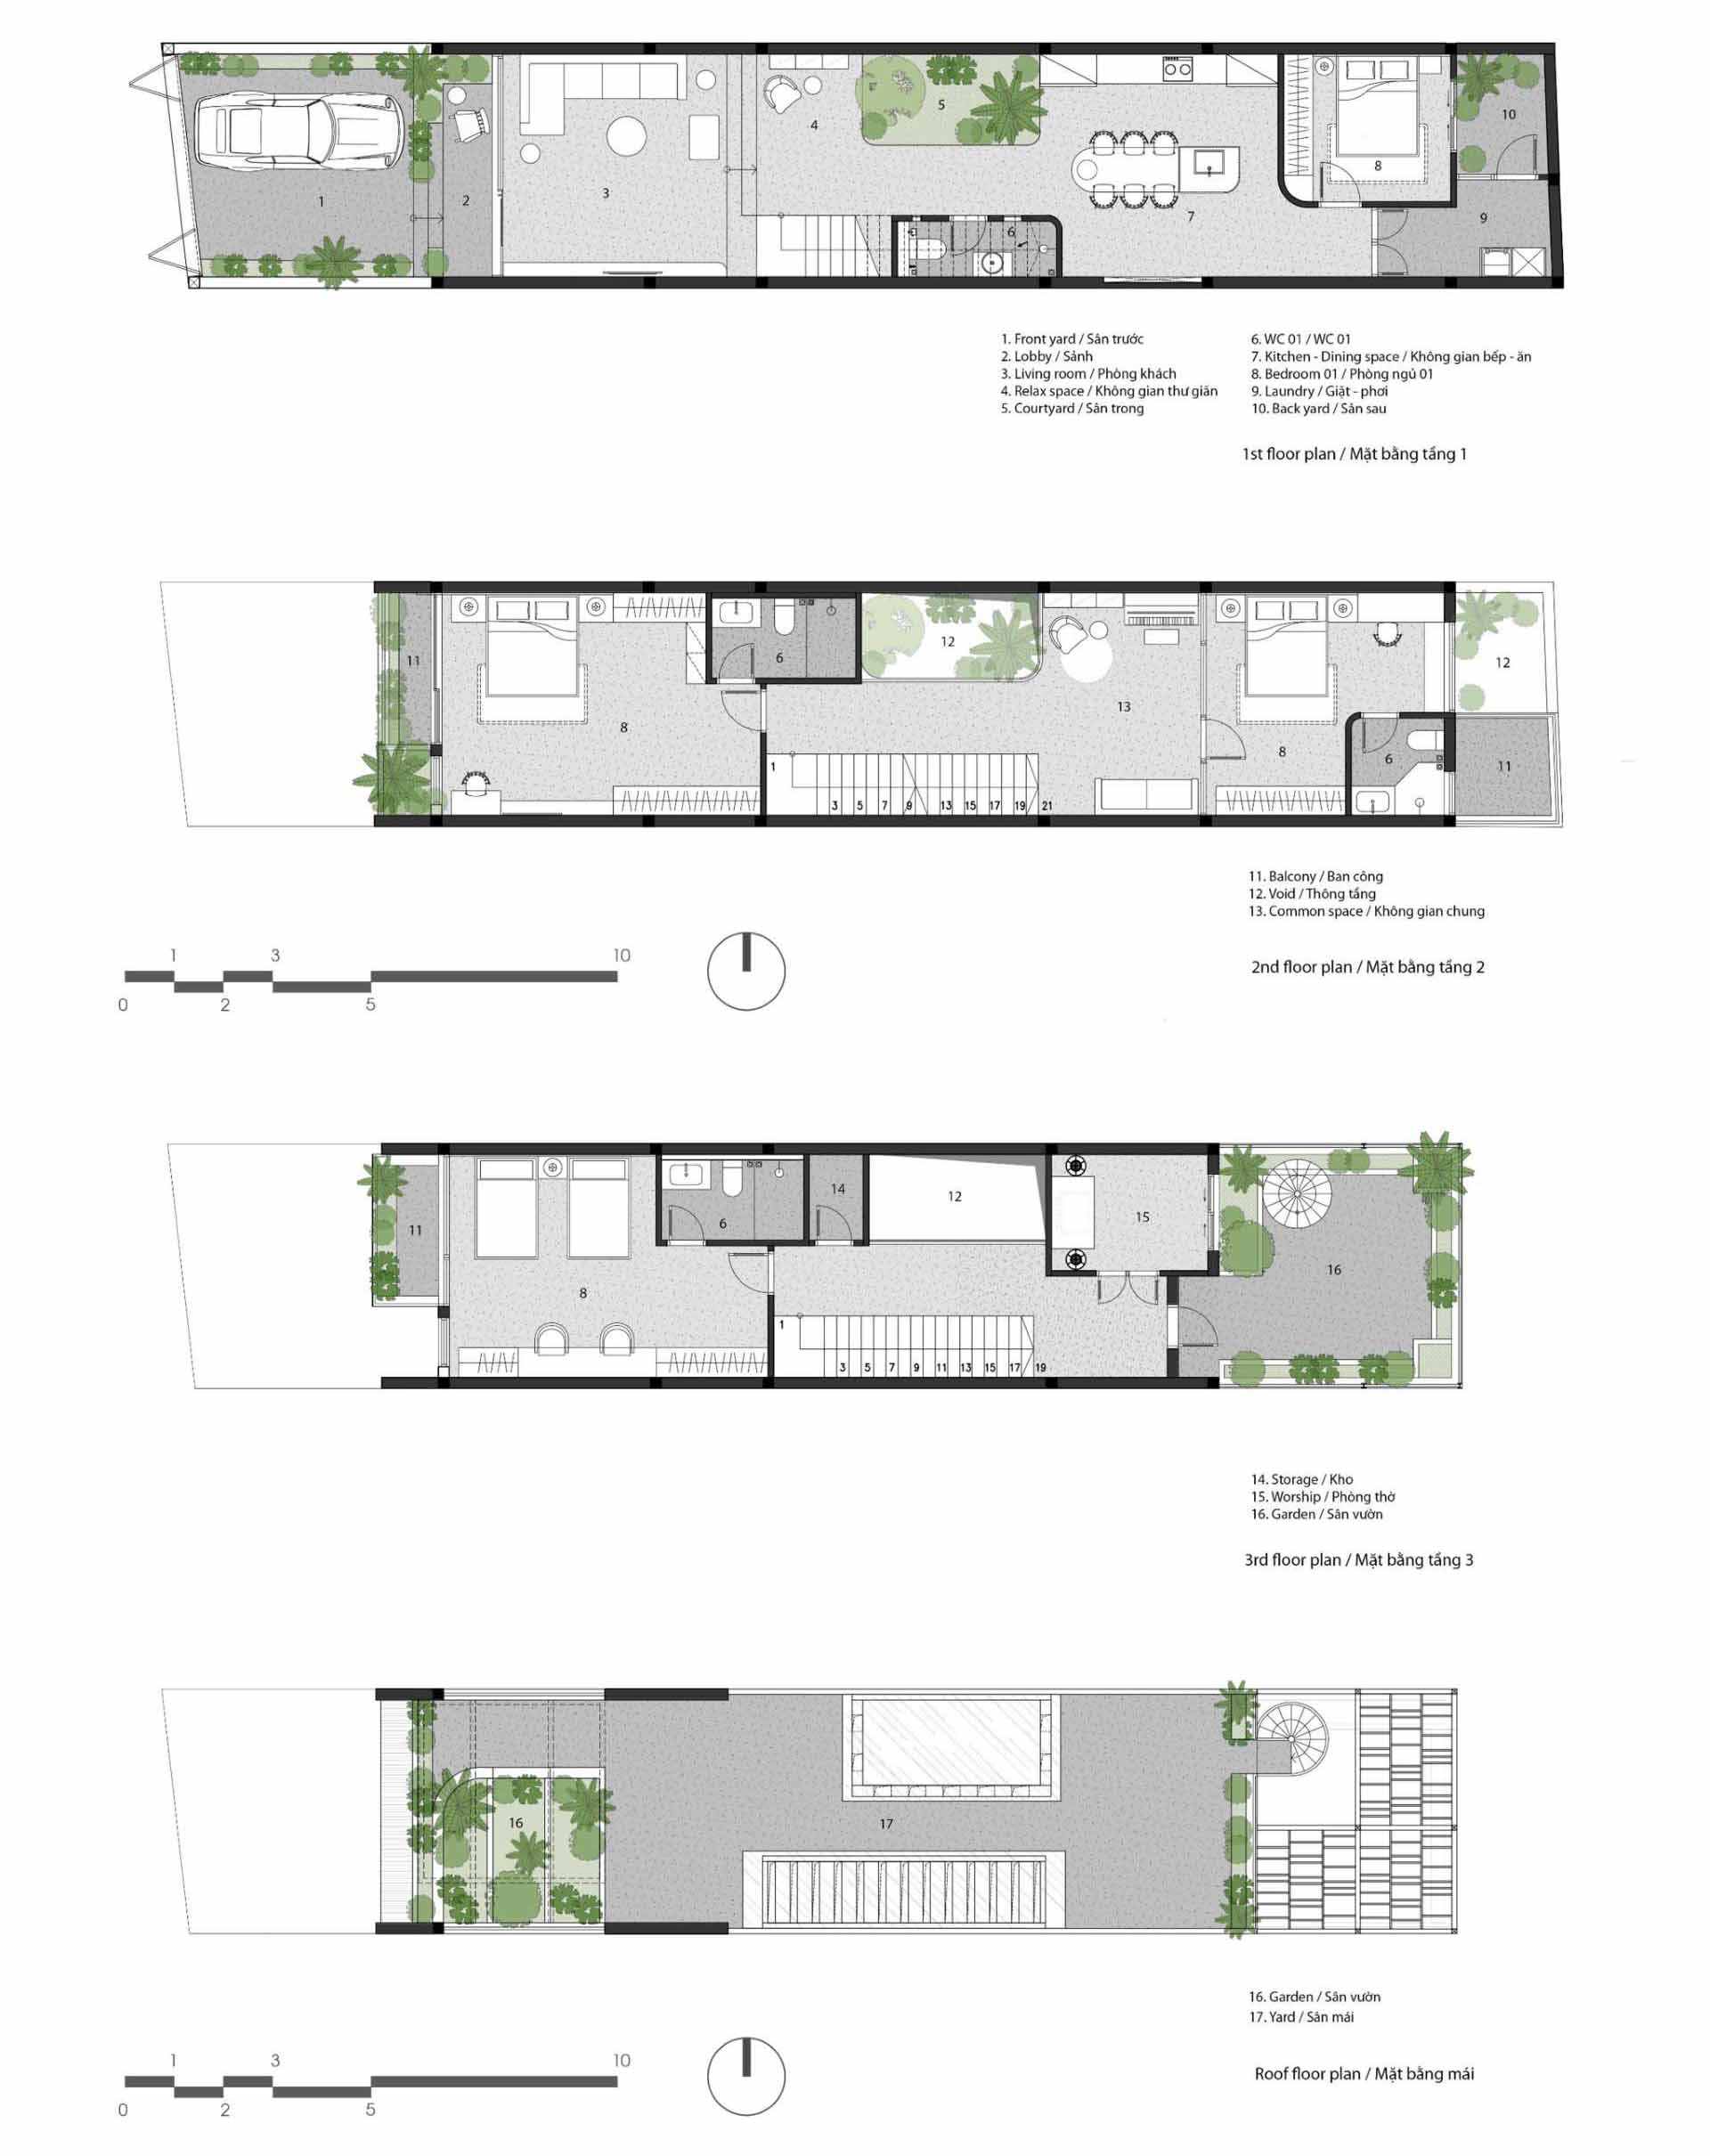 The floor plan of a modern house